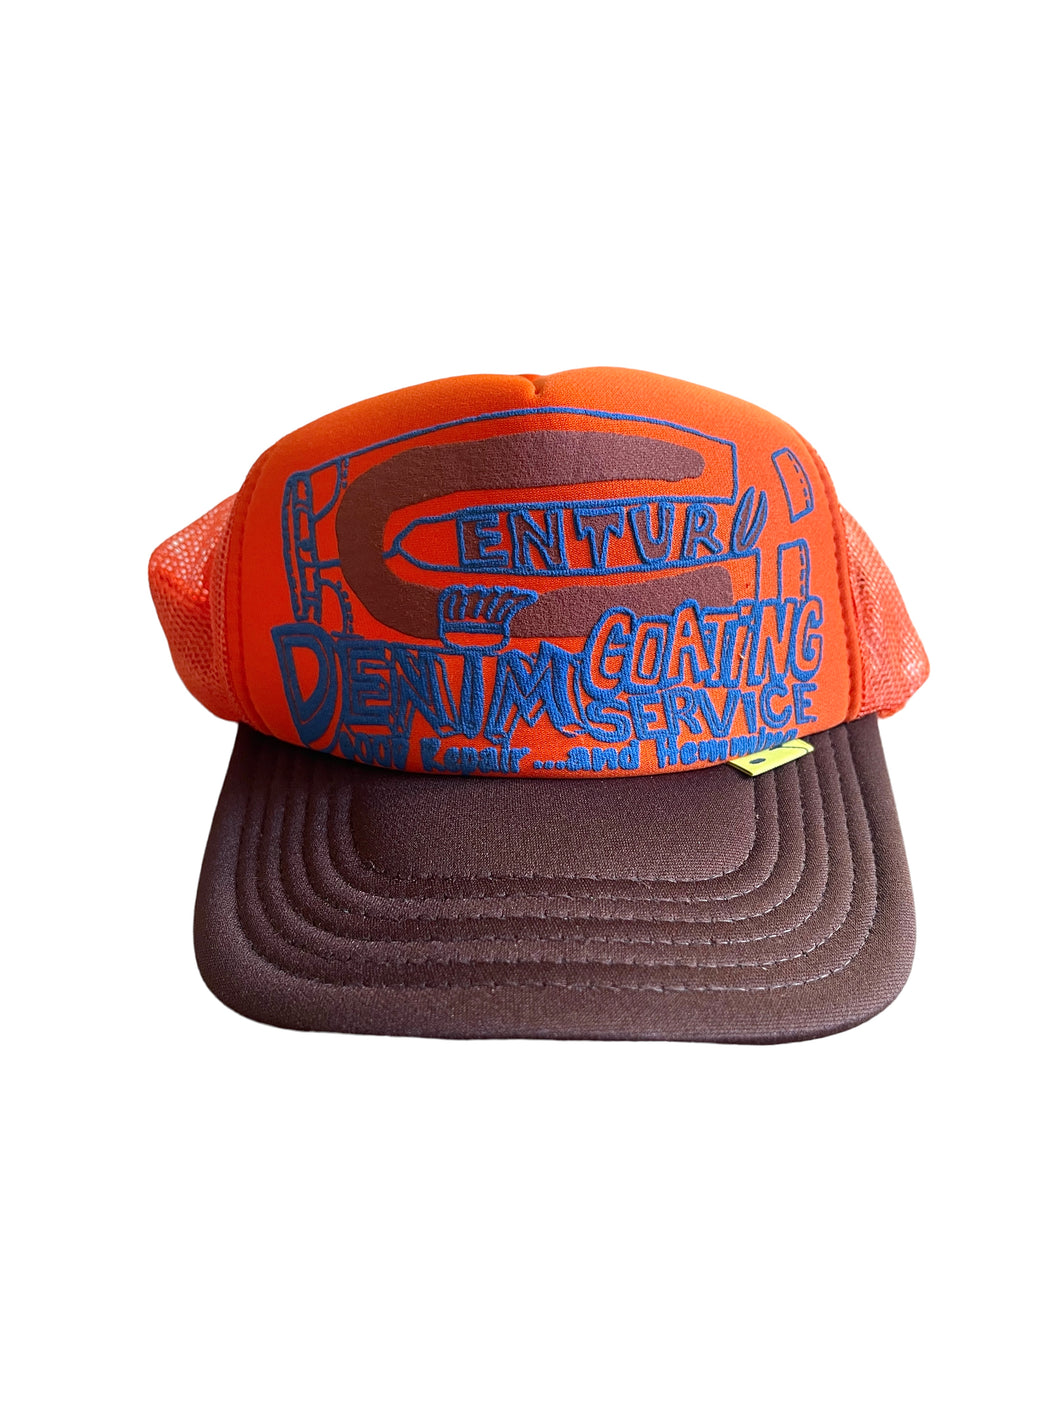 Kapital Century Denim Coating Service Trucker Hat